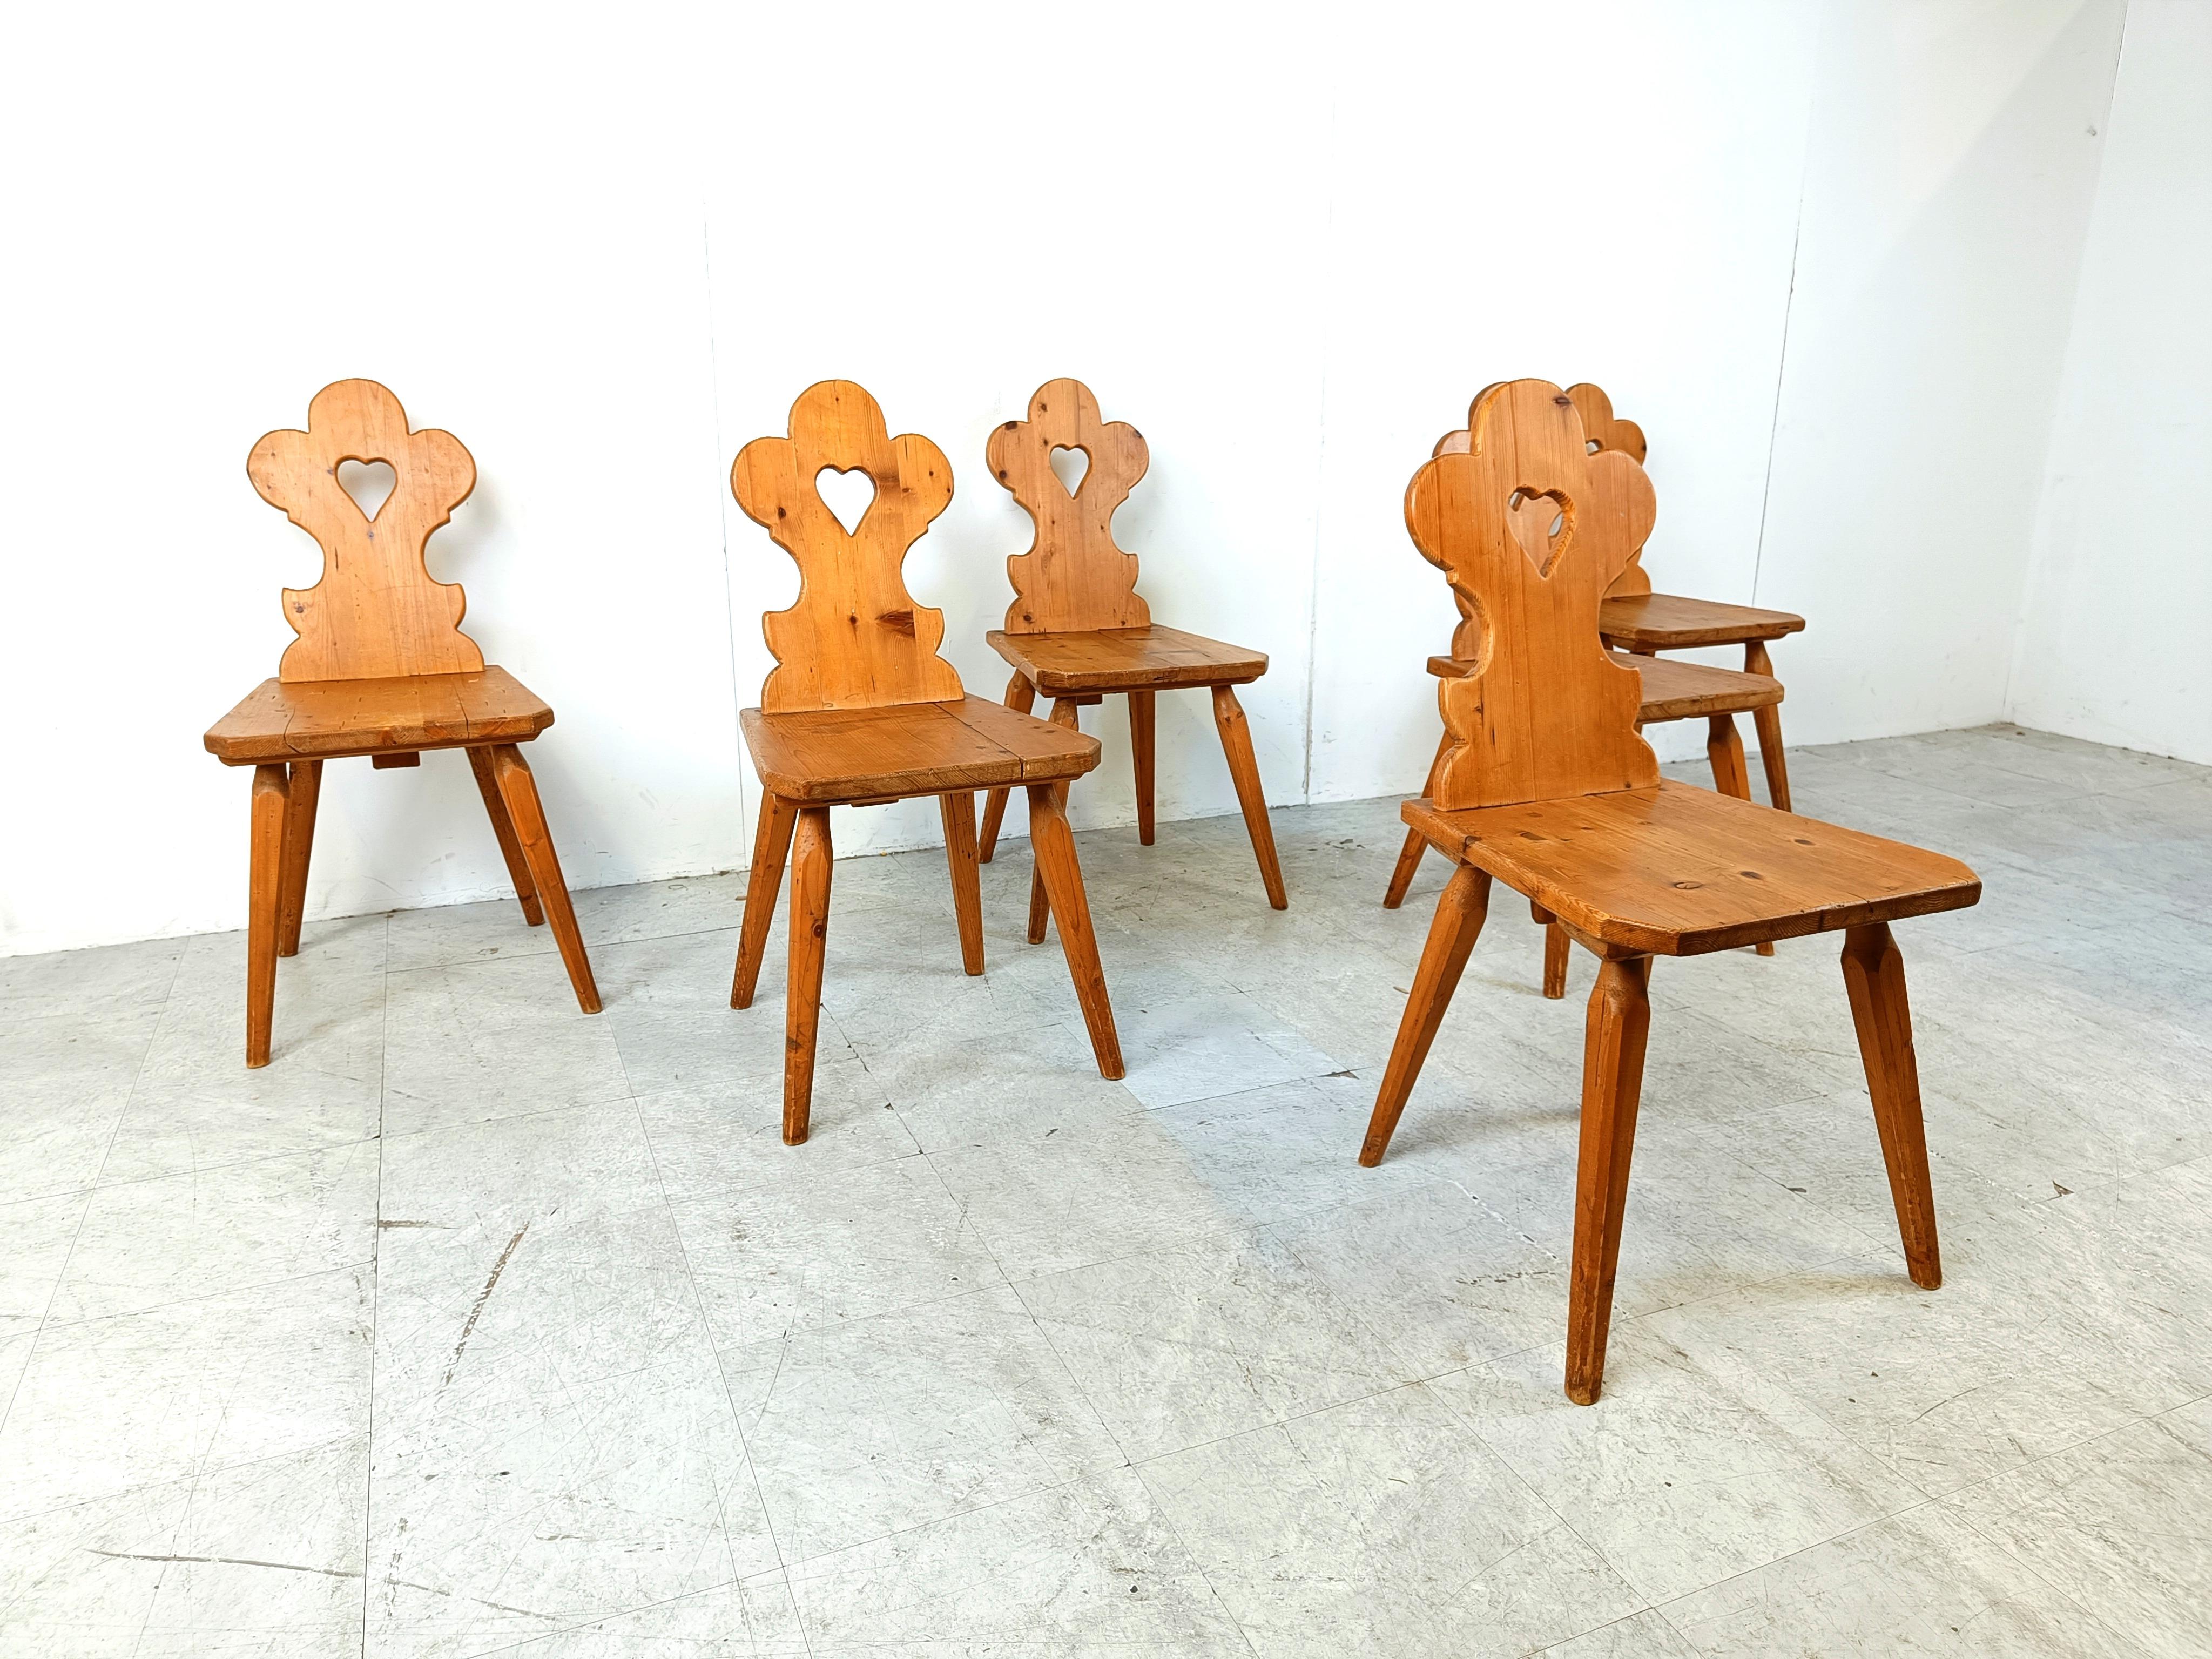 Vintage swedish folk art chairs, 1960s For Sale 1